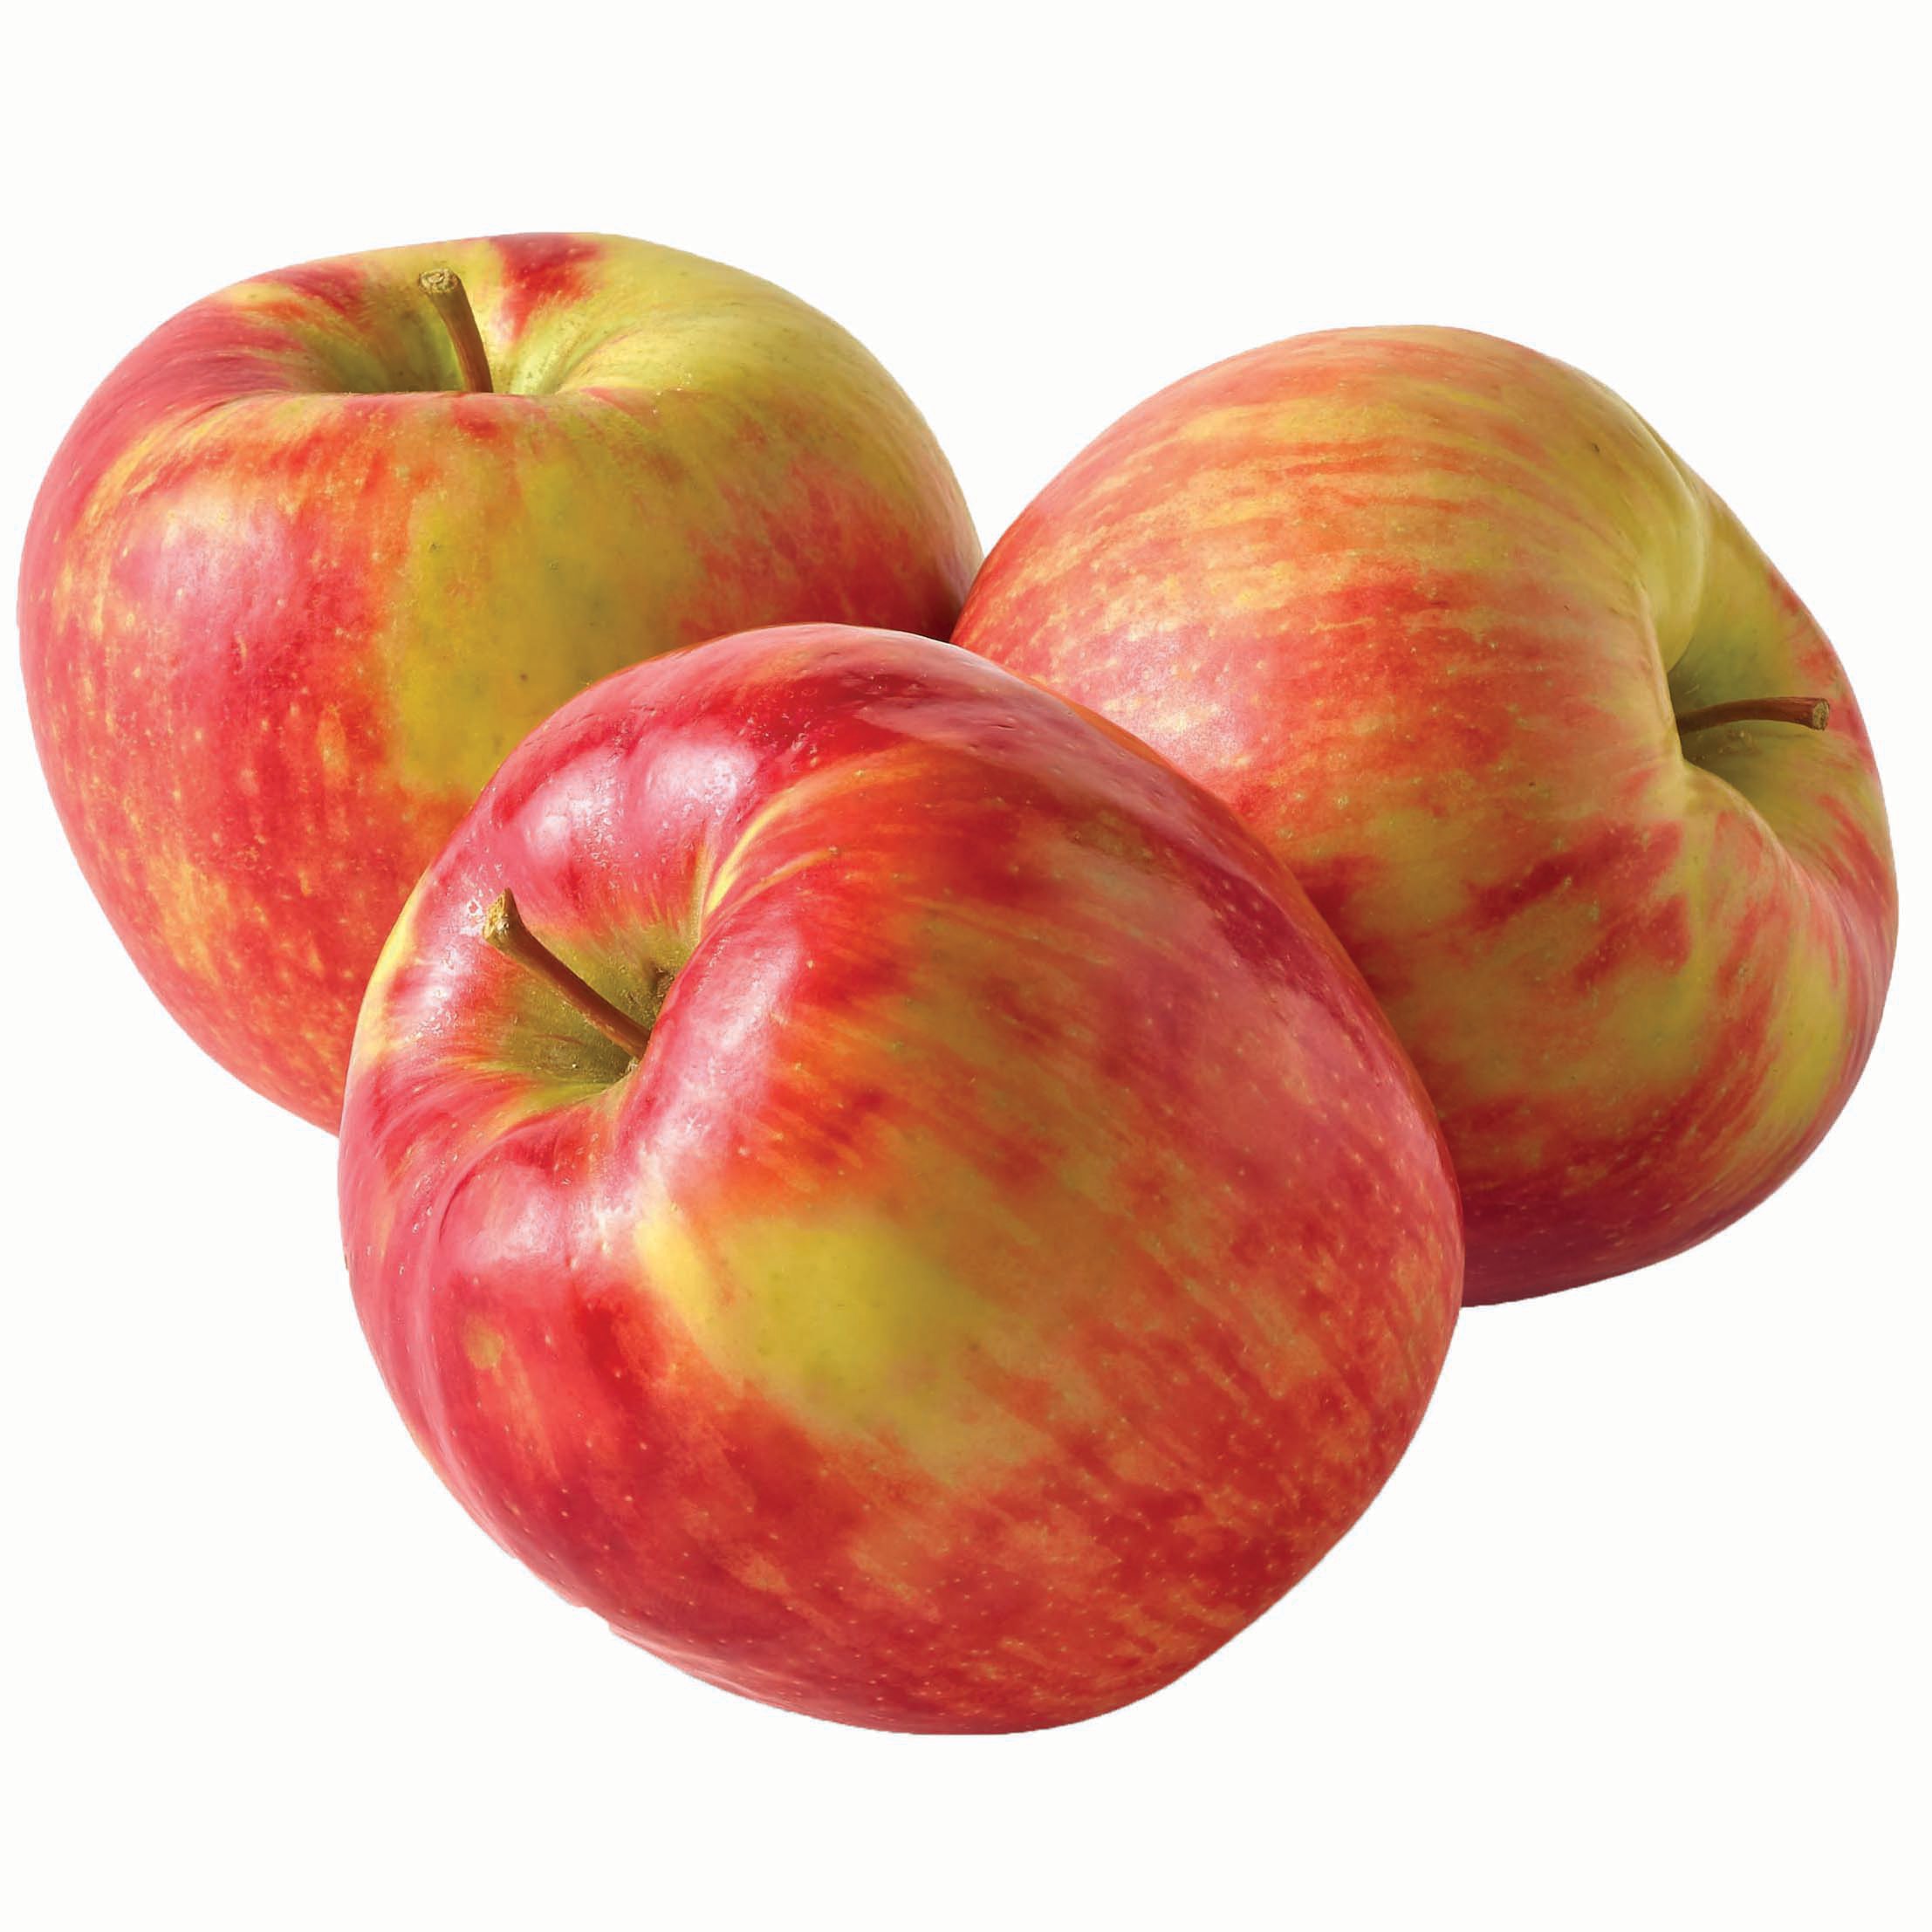 Honey Crisp Apples - Fruits That Start With H